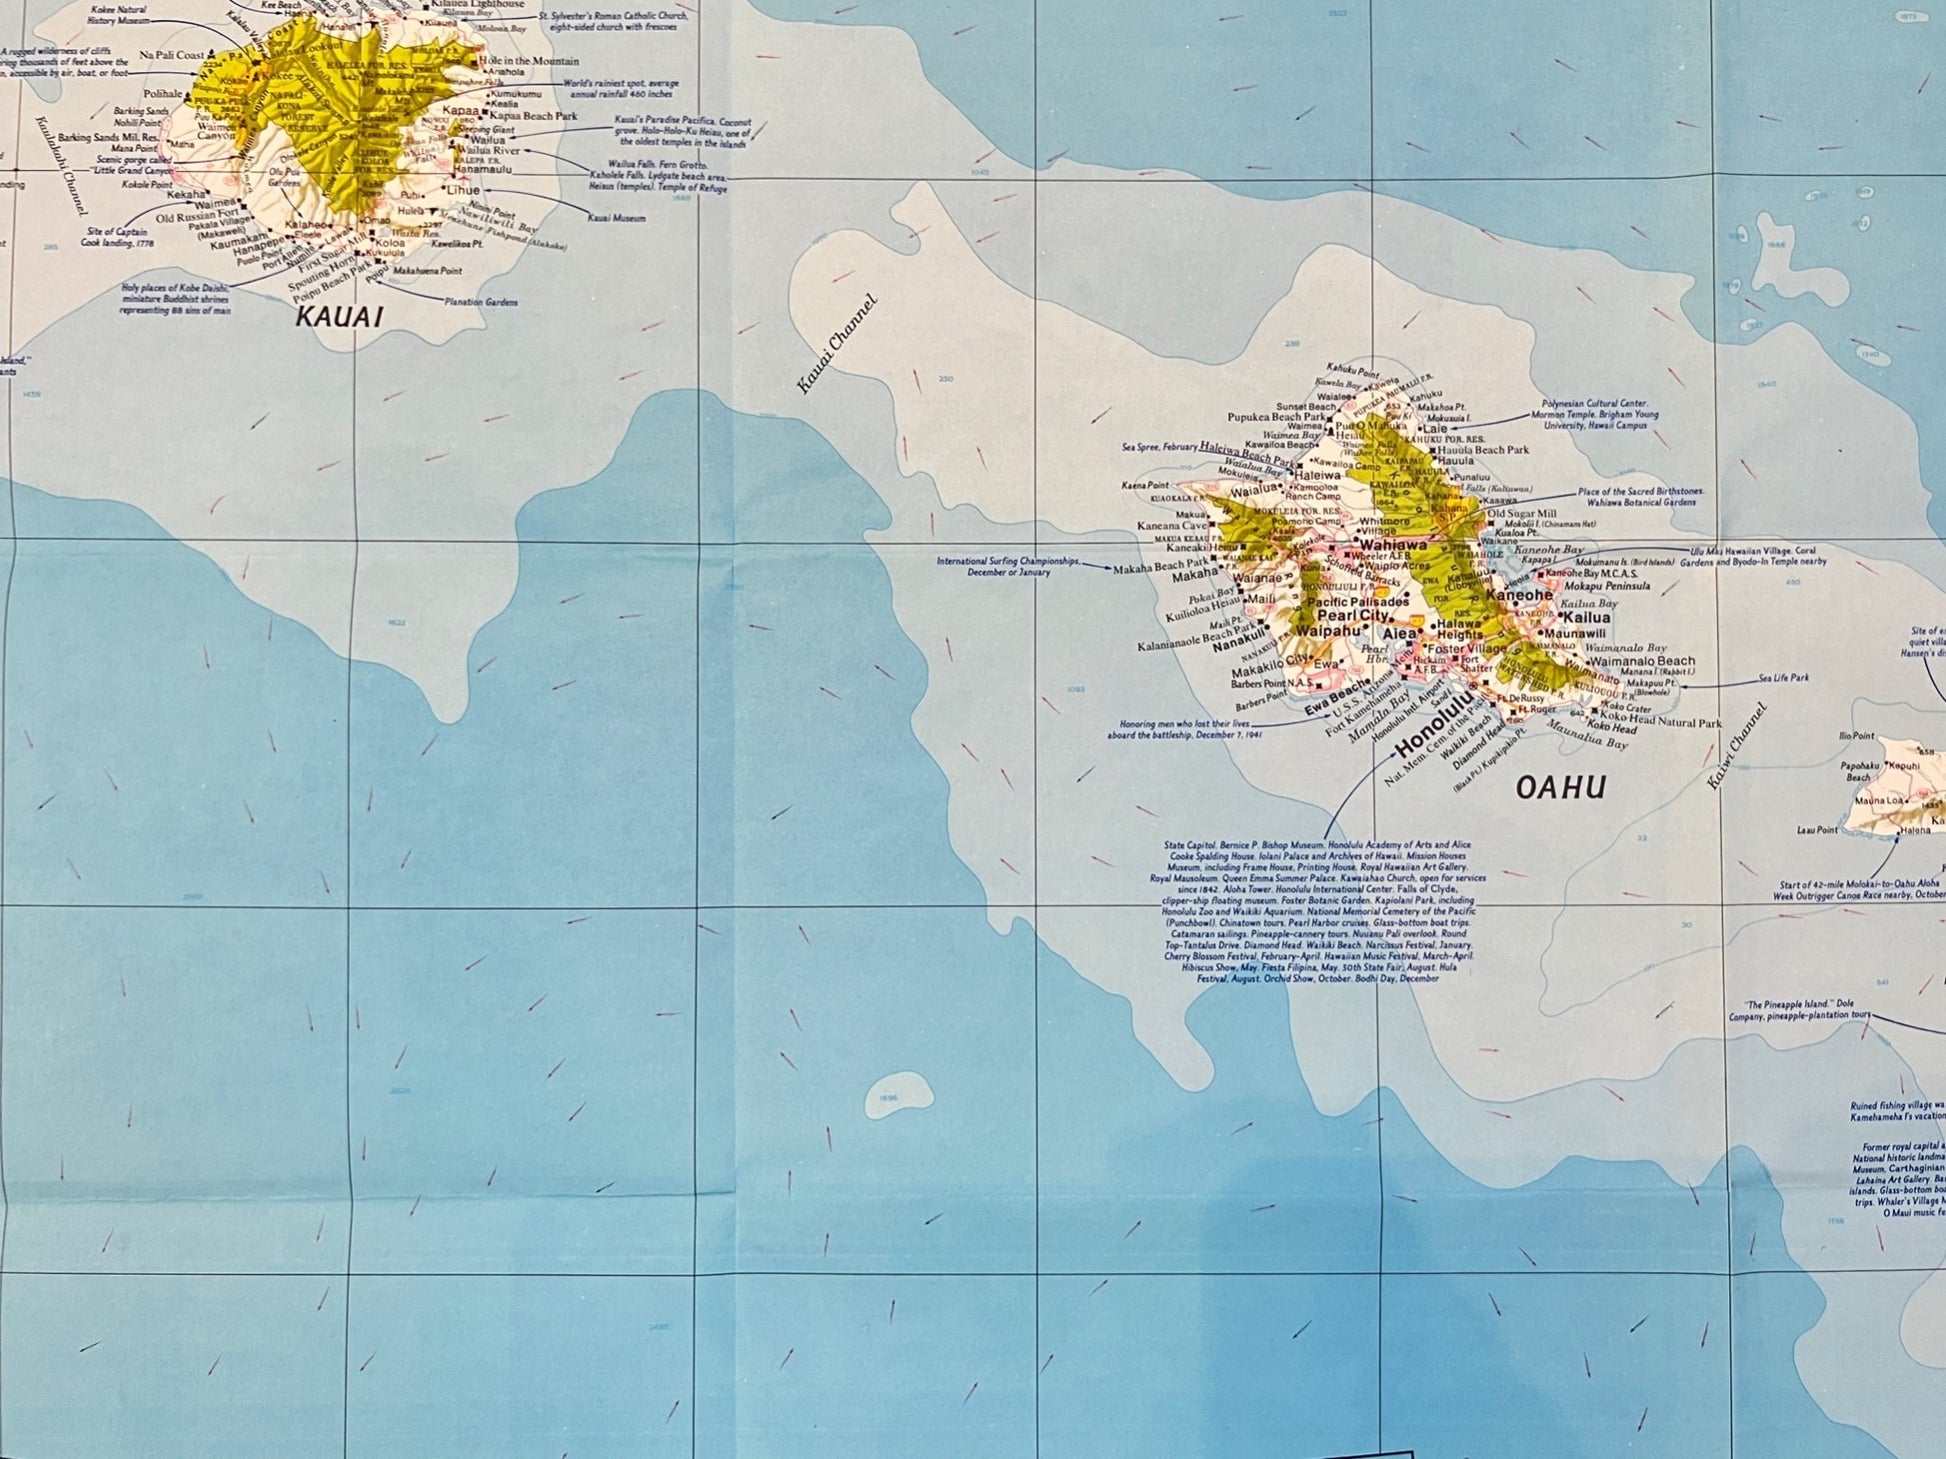 Vintage Map Print - National Geographic - Map of Hawaii - Honolulu - USA - 1975 - Dahlströms Fine Art